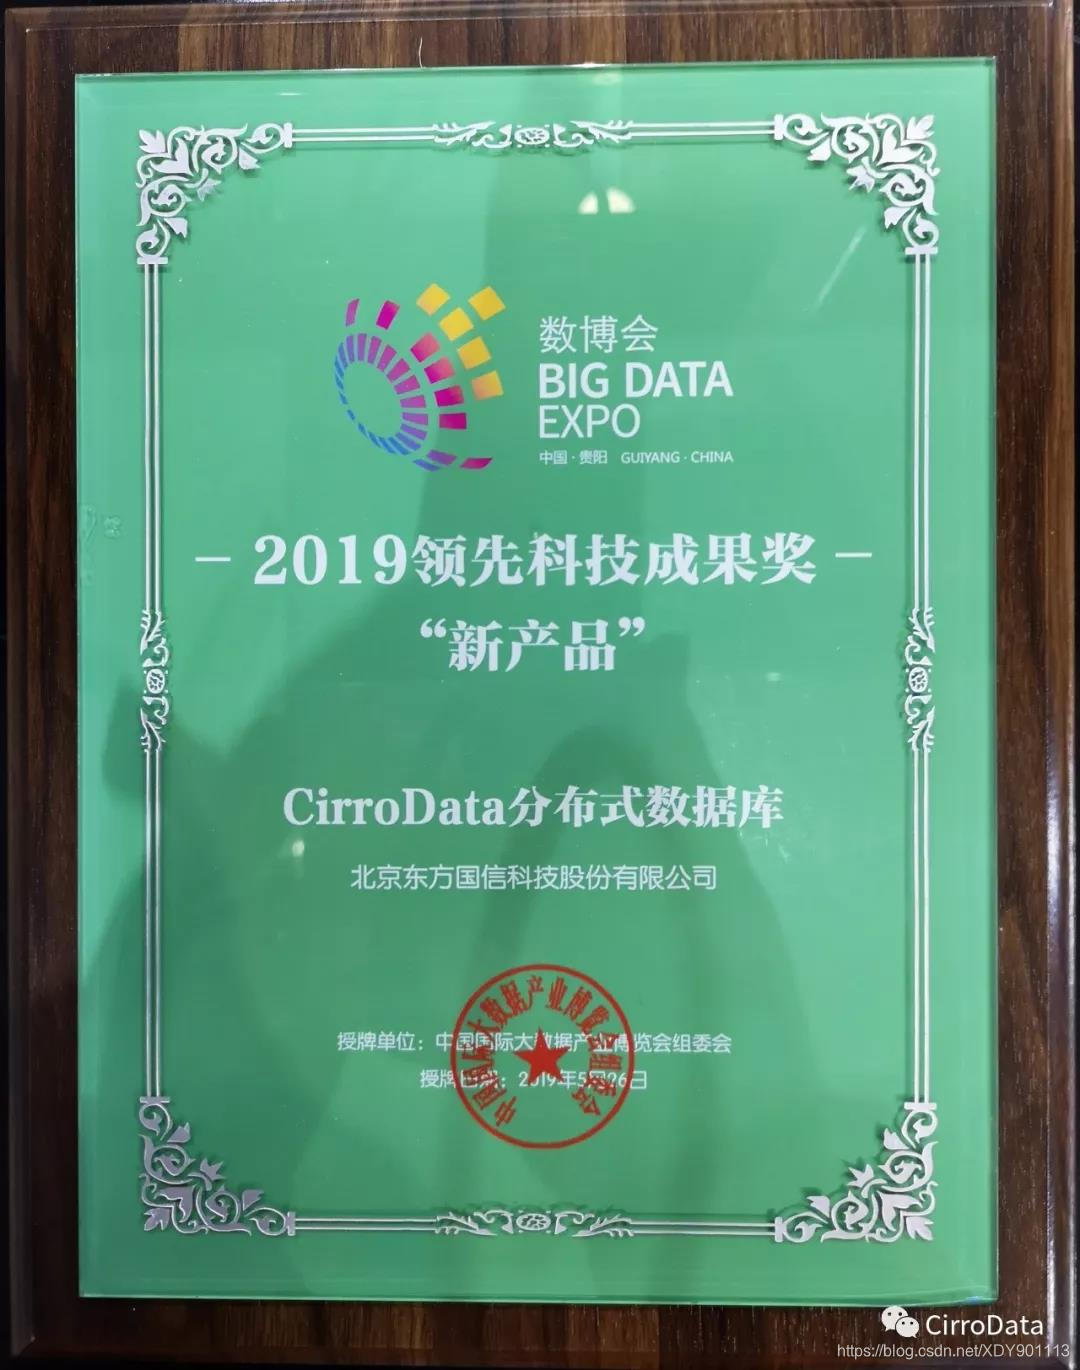 CirroData分布式数据库荣获“新产品”领先科技成果奖